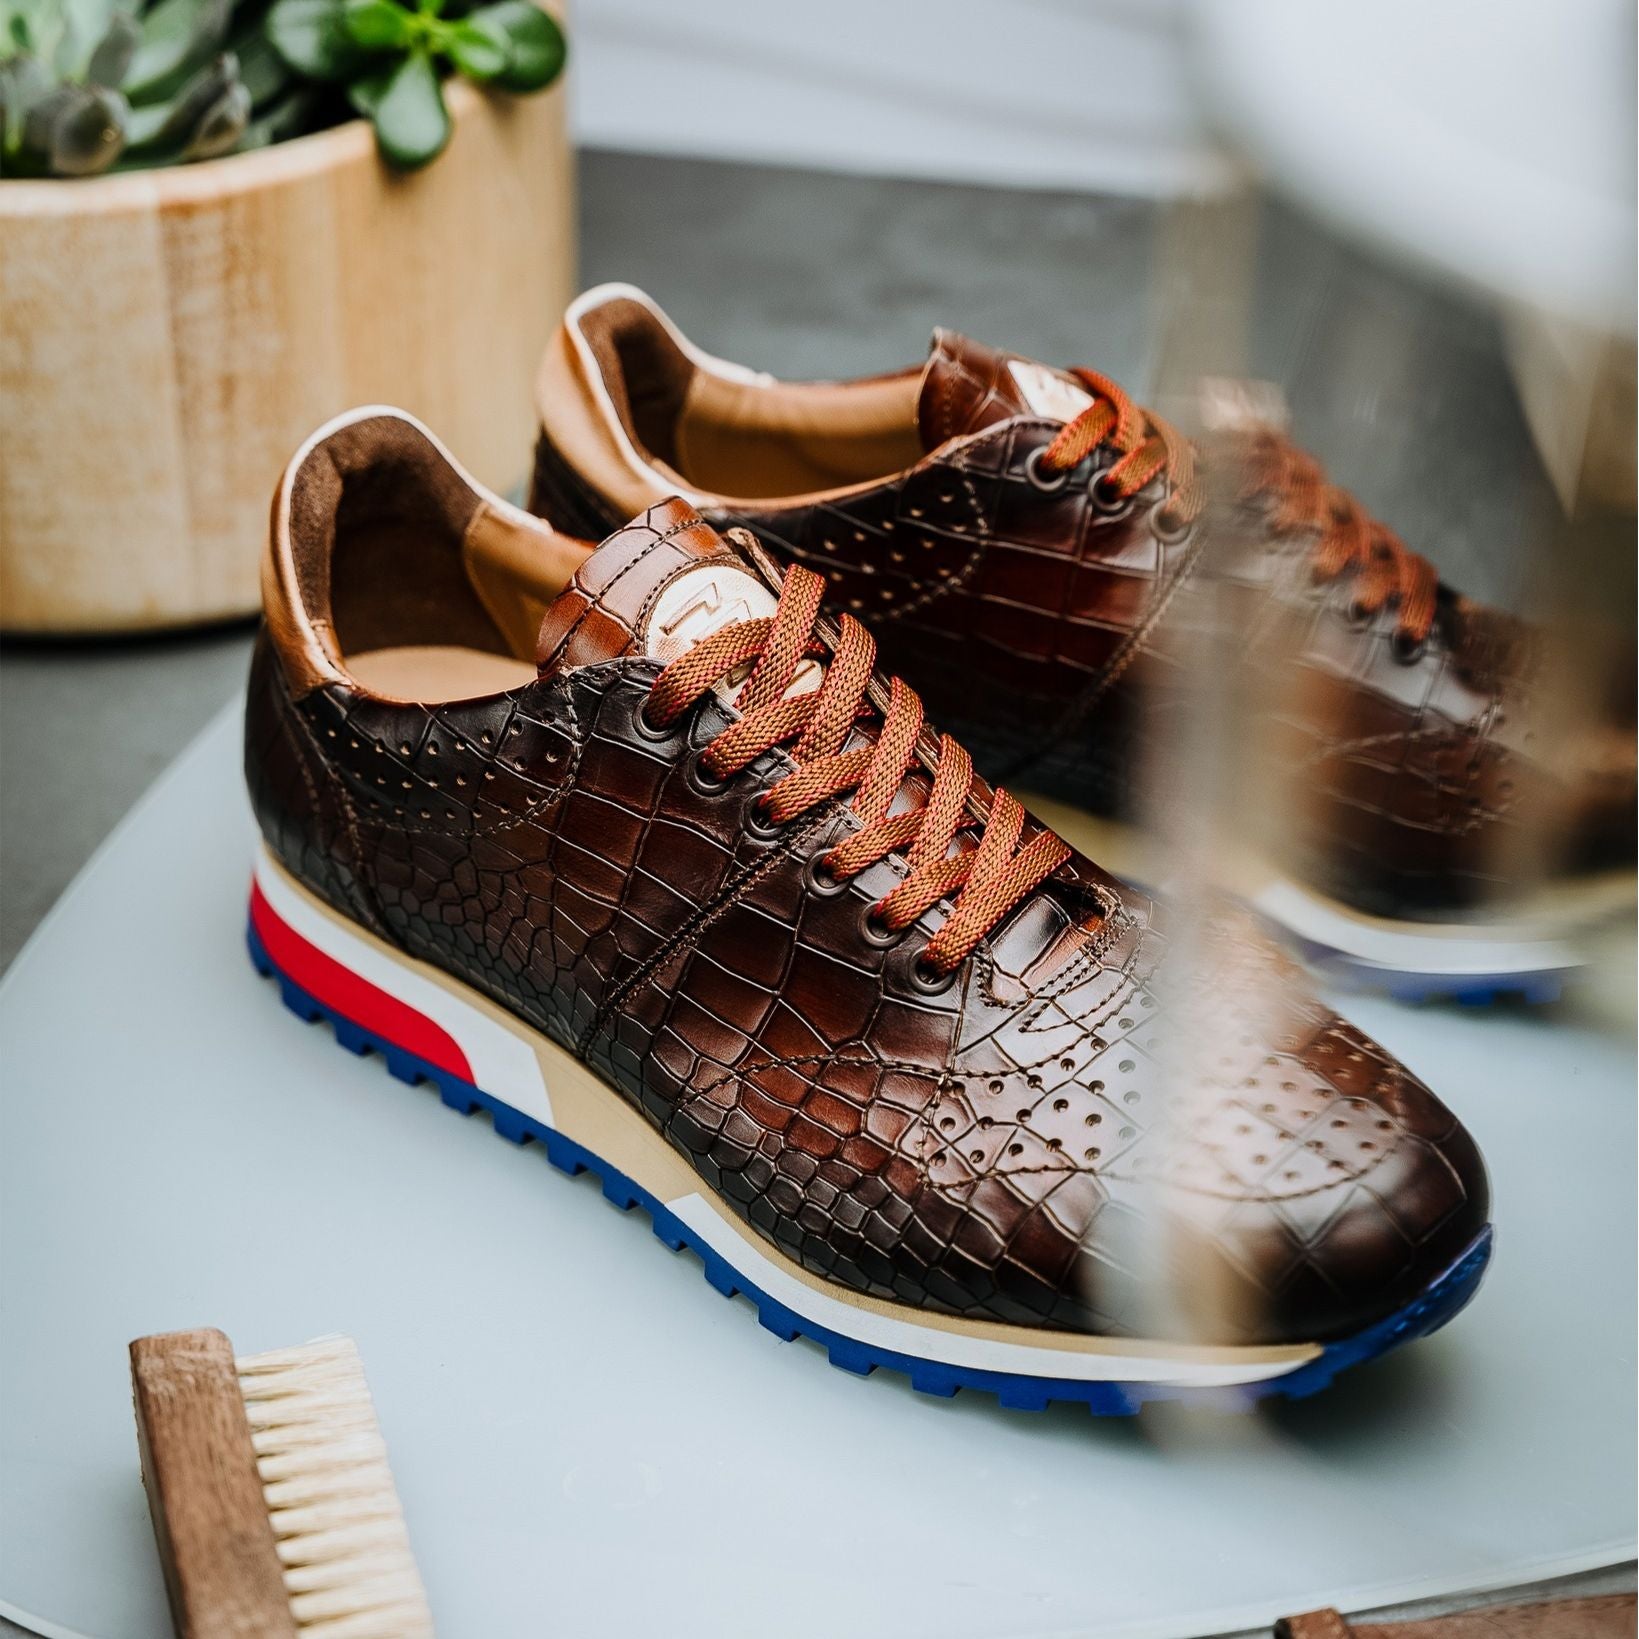 Rocco Crocodile Embossed Calfskin Sneaker in Brown by Zelli Italia